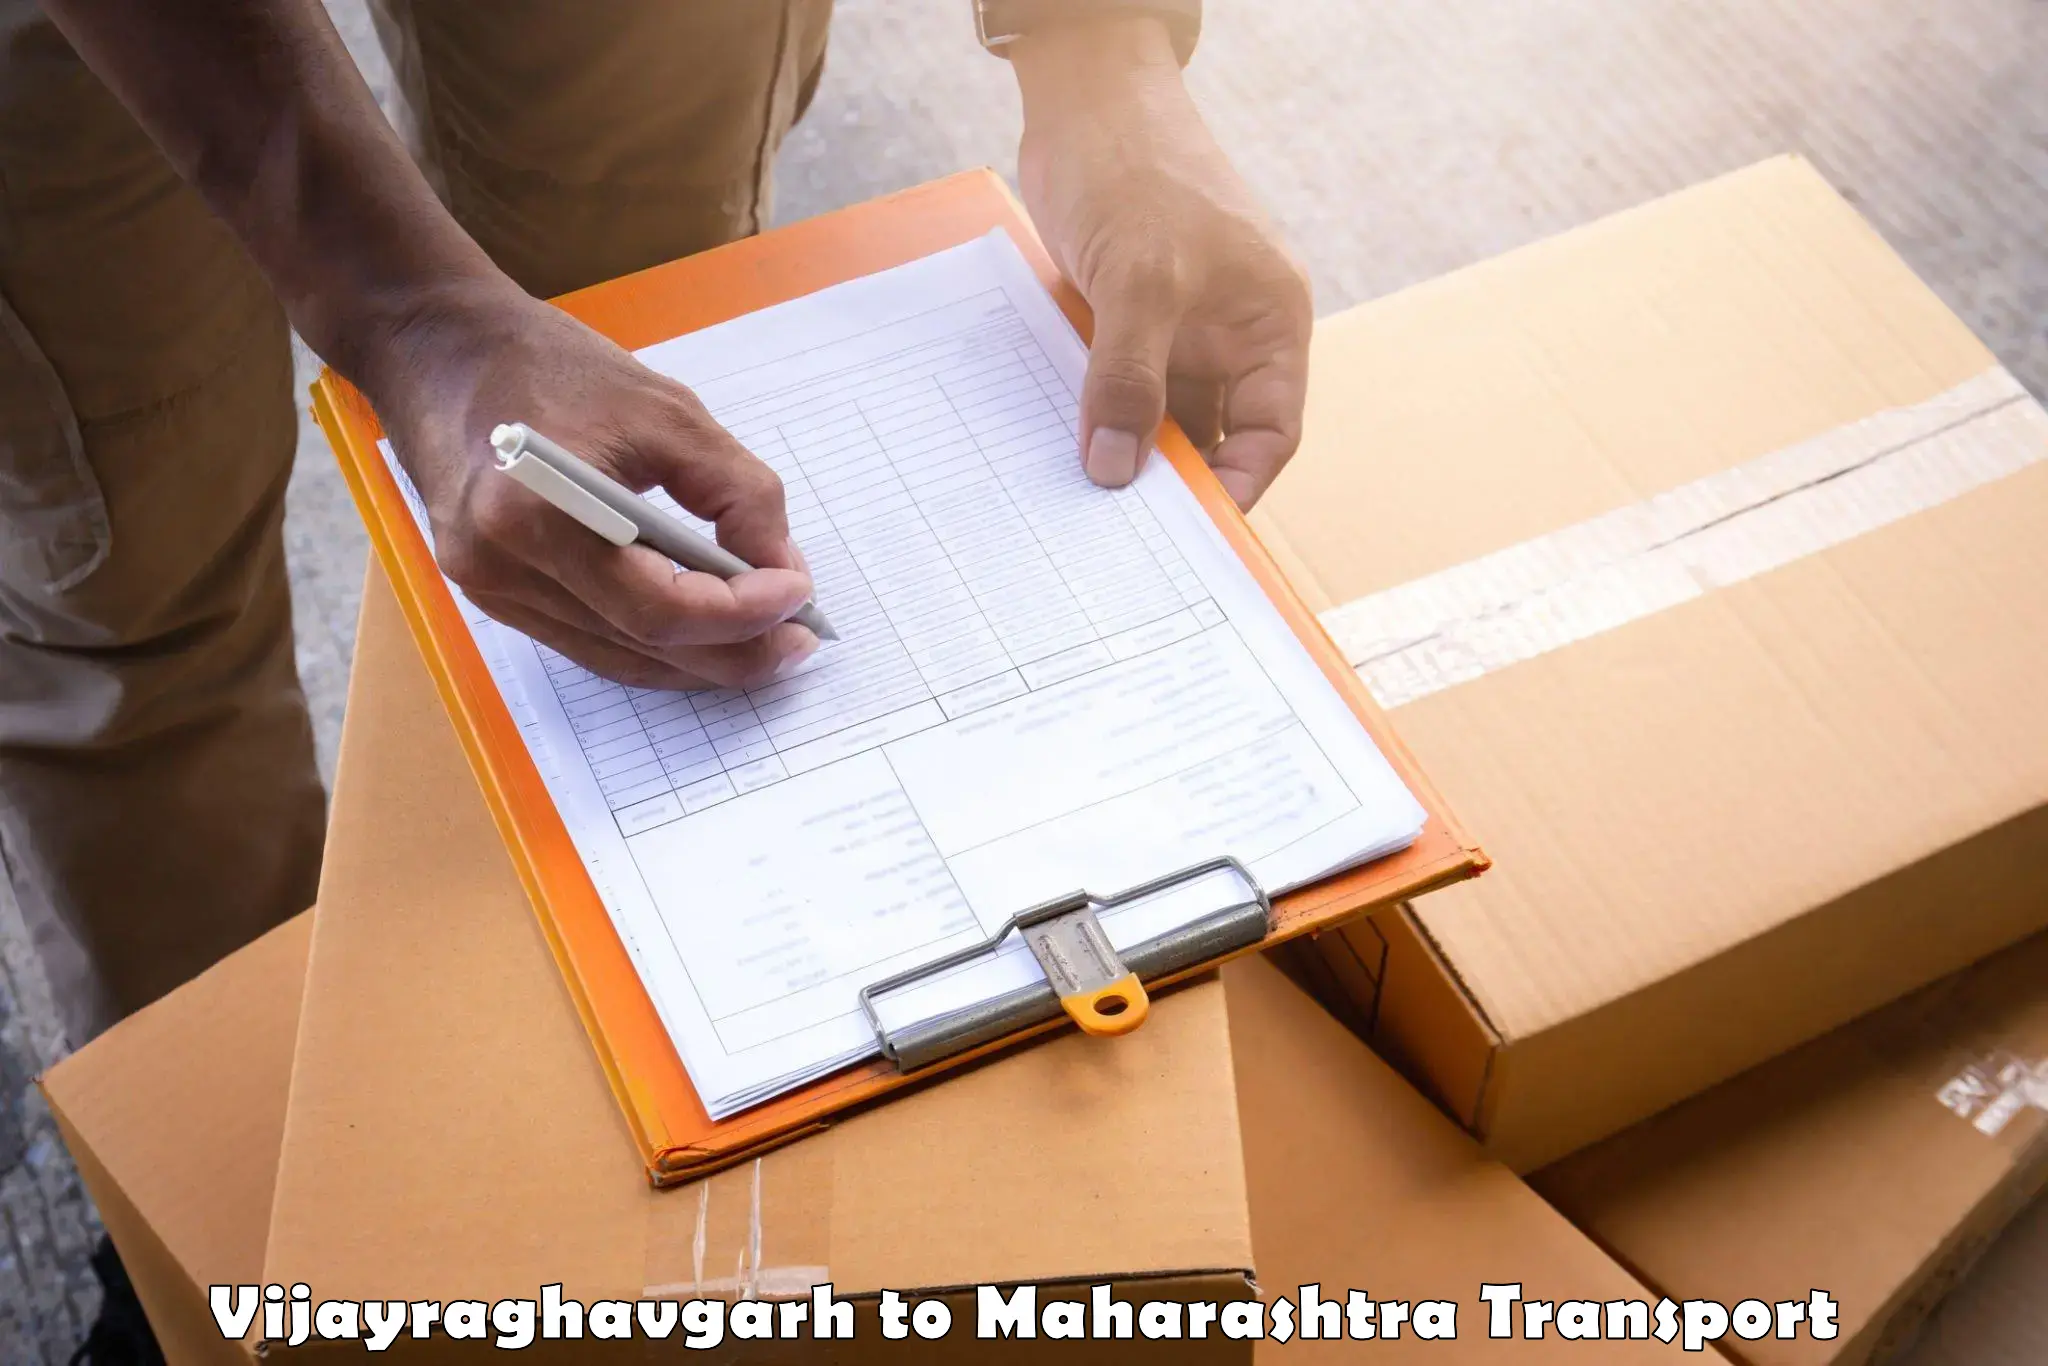 Luggage transport services in Vijayraghavgarh to Amravati